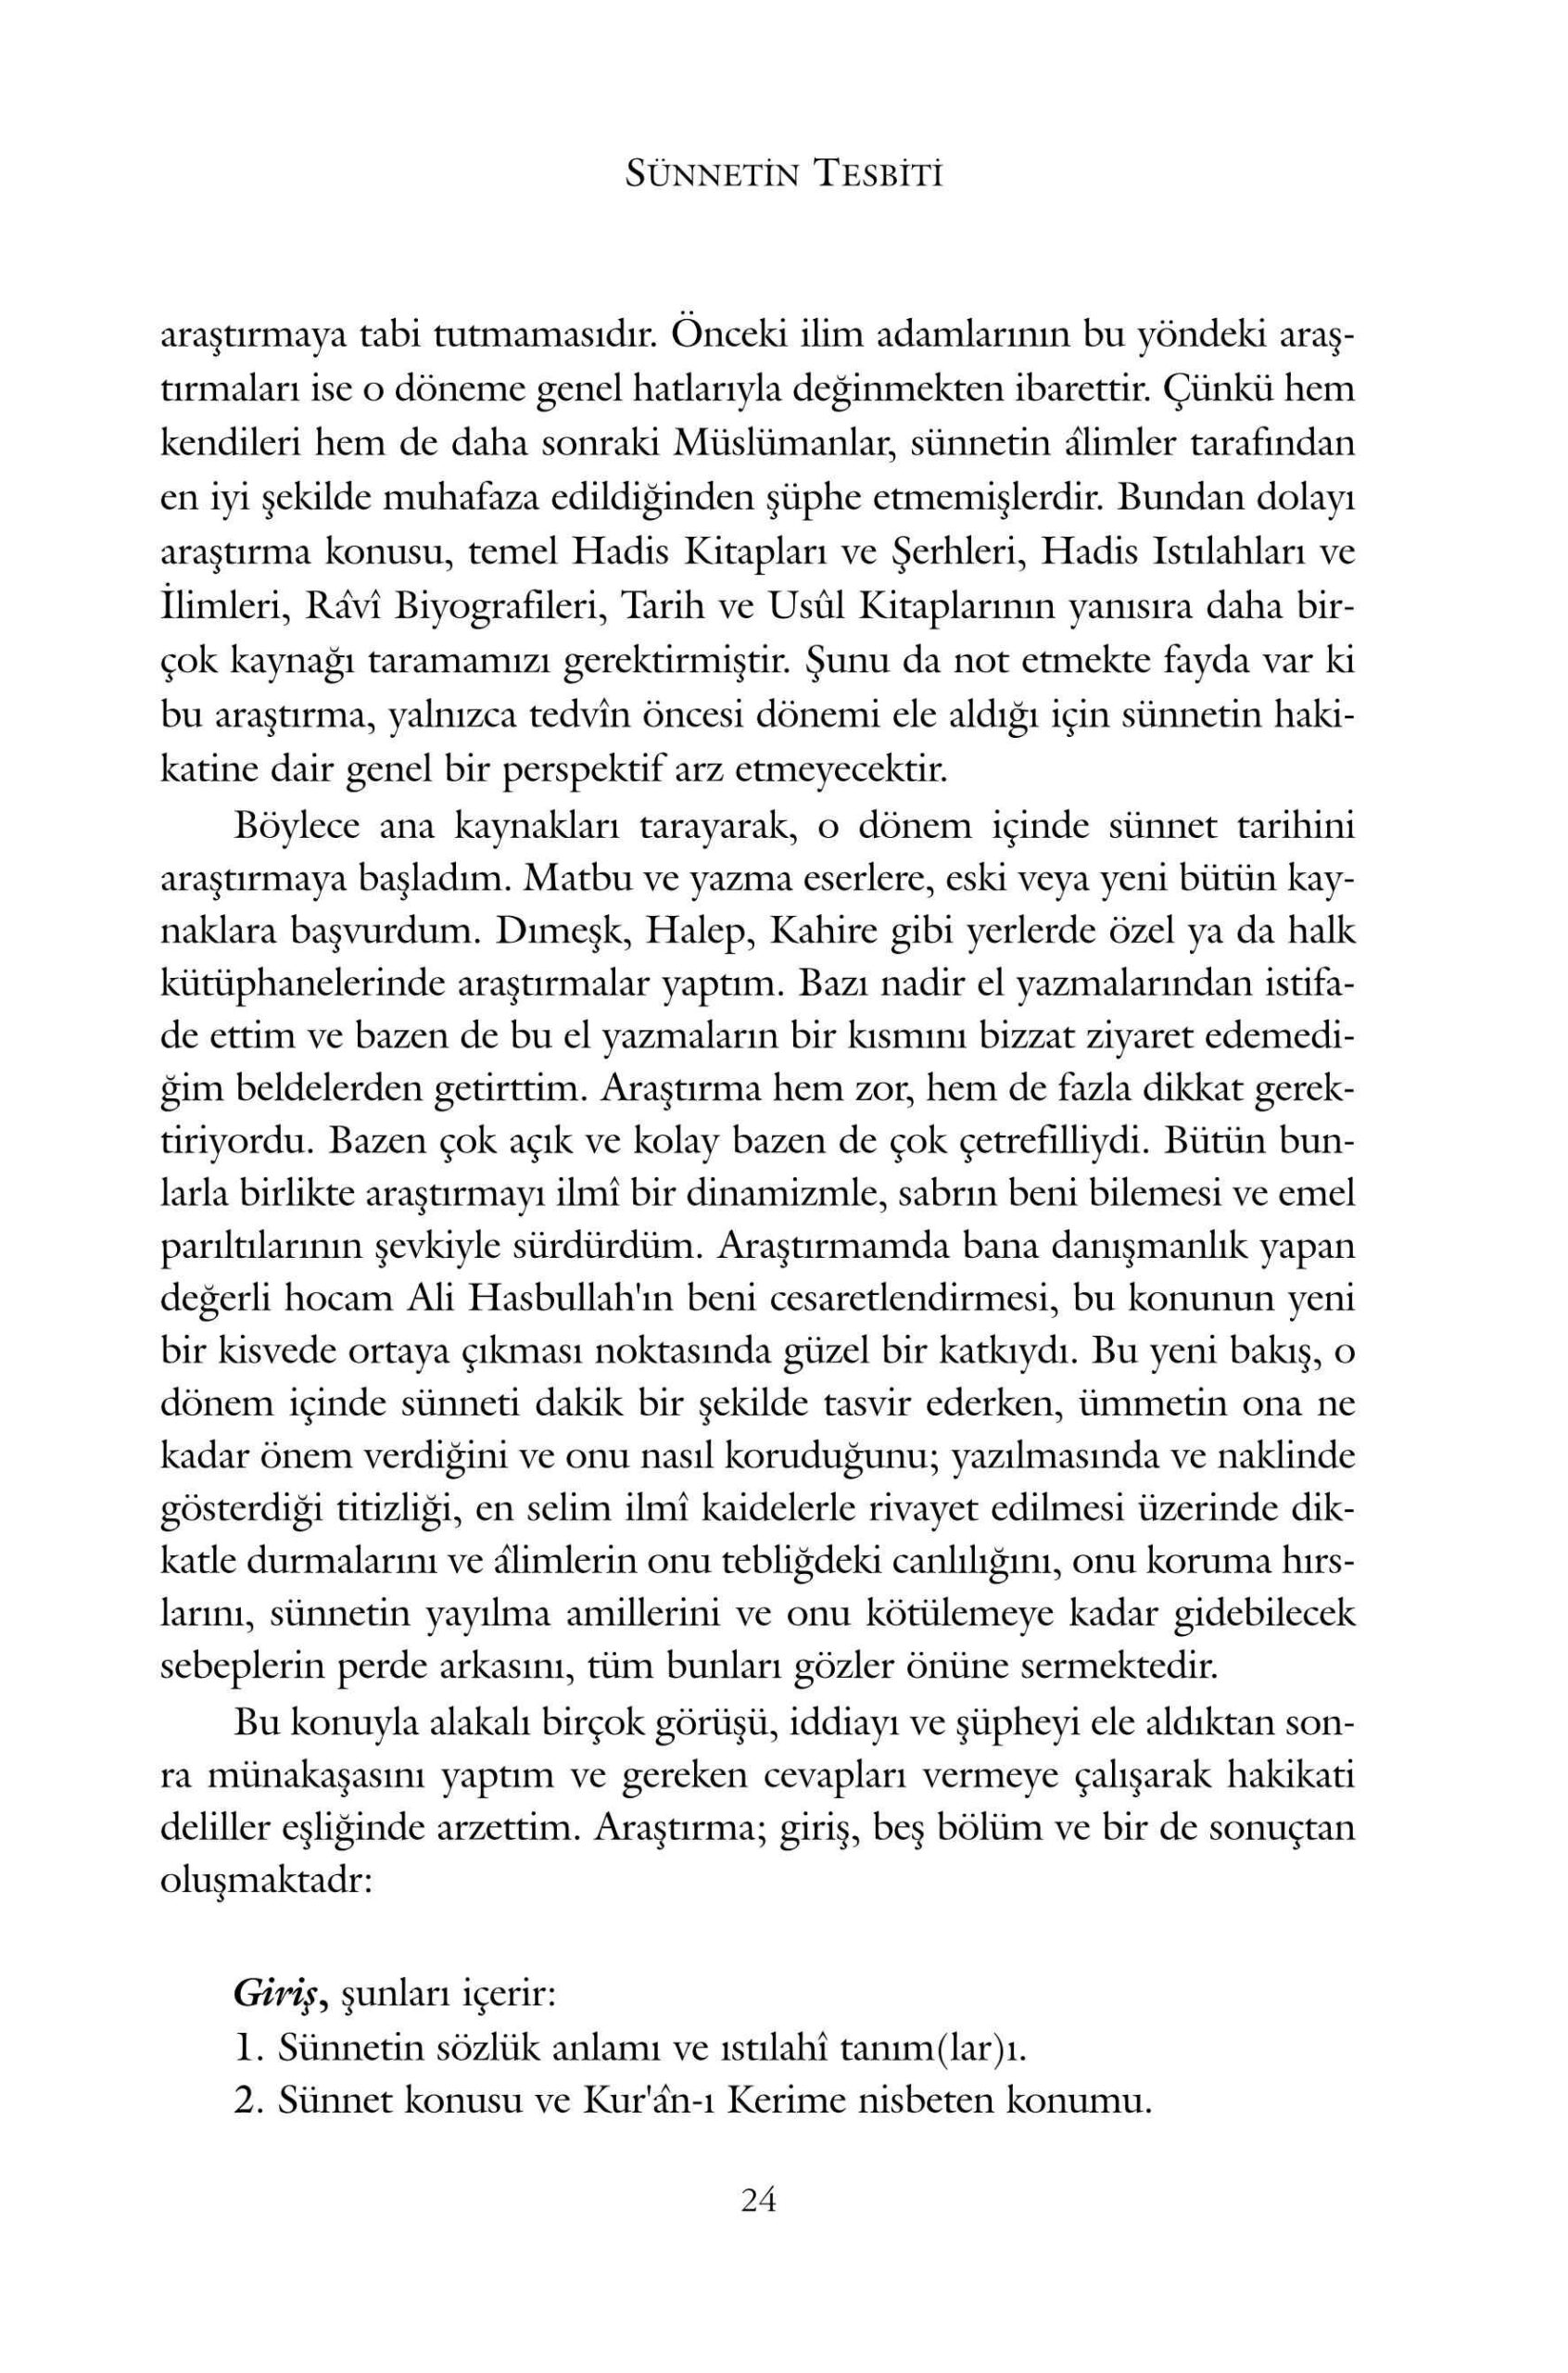 Muhammed Accac ElHatib - Sunnetin Tesbiti - IsikAkademiY.pdf, 520-Sayfa 